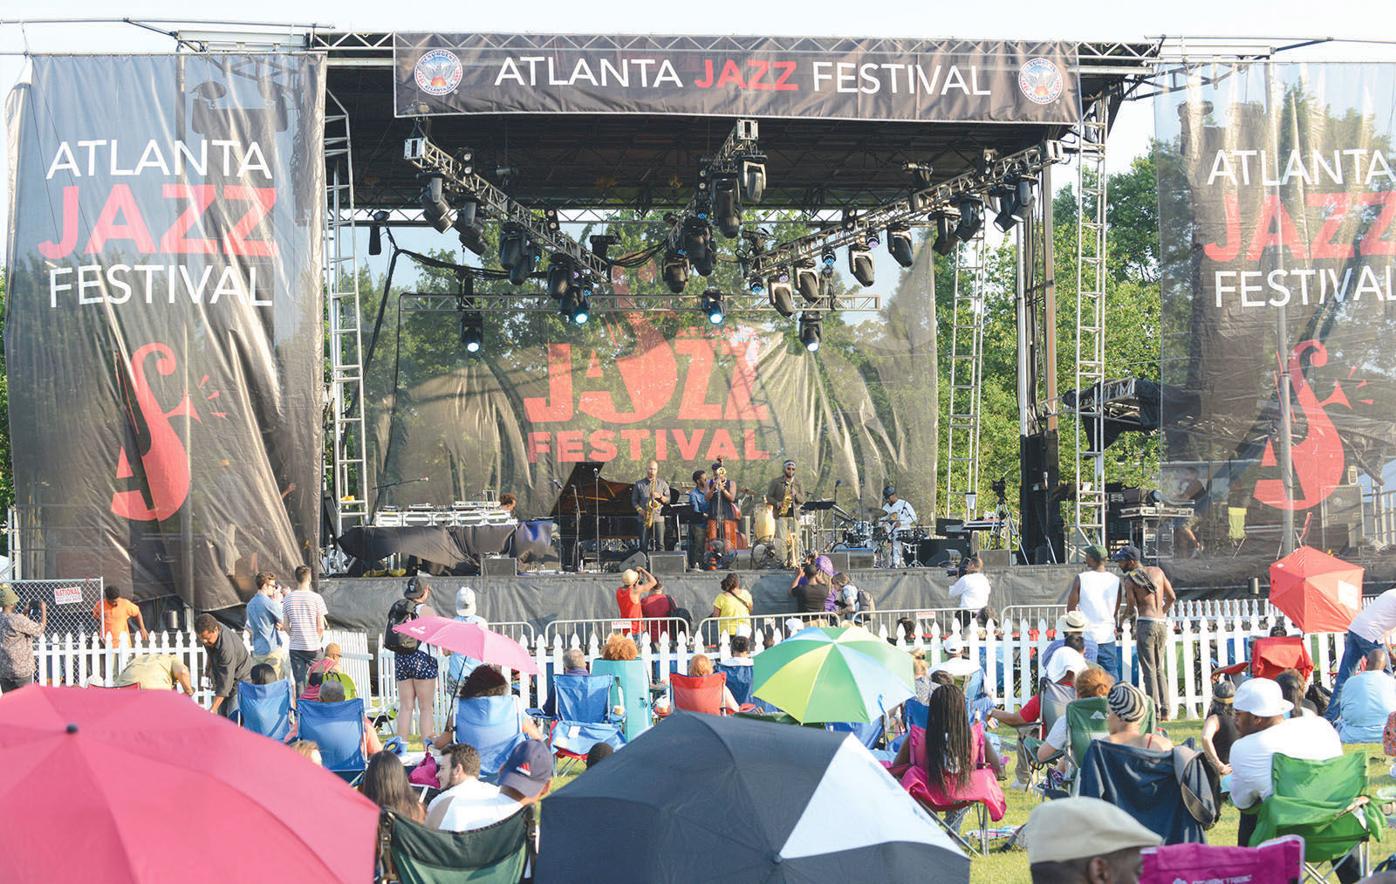 41st Atlanta Jazz Festival to have female spin Community